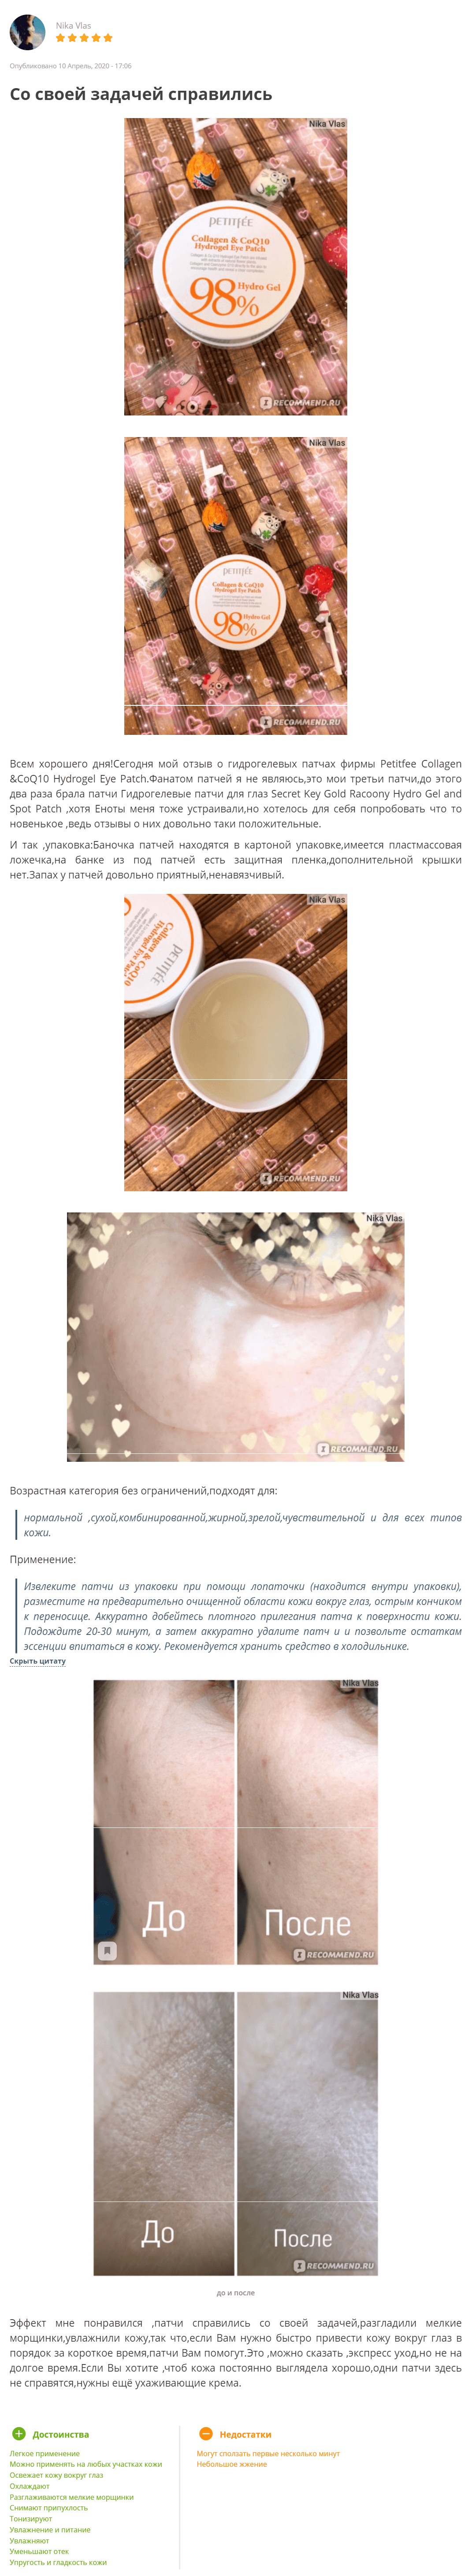 Collagen&CoQ10 Hydrogel Eye Patch [PetitFee] jnpsd 1 (1)